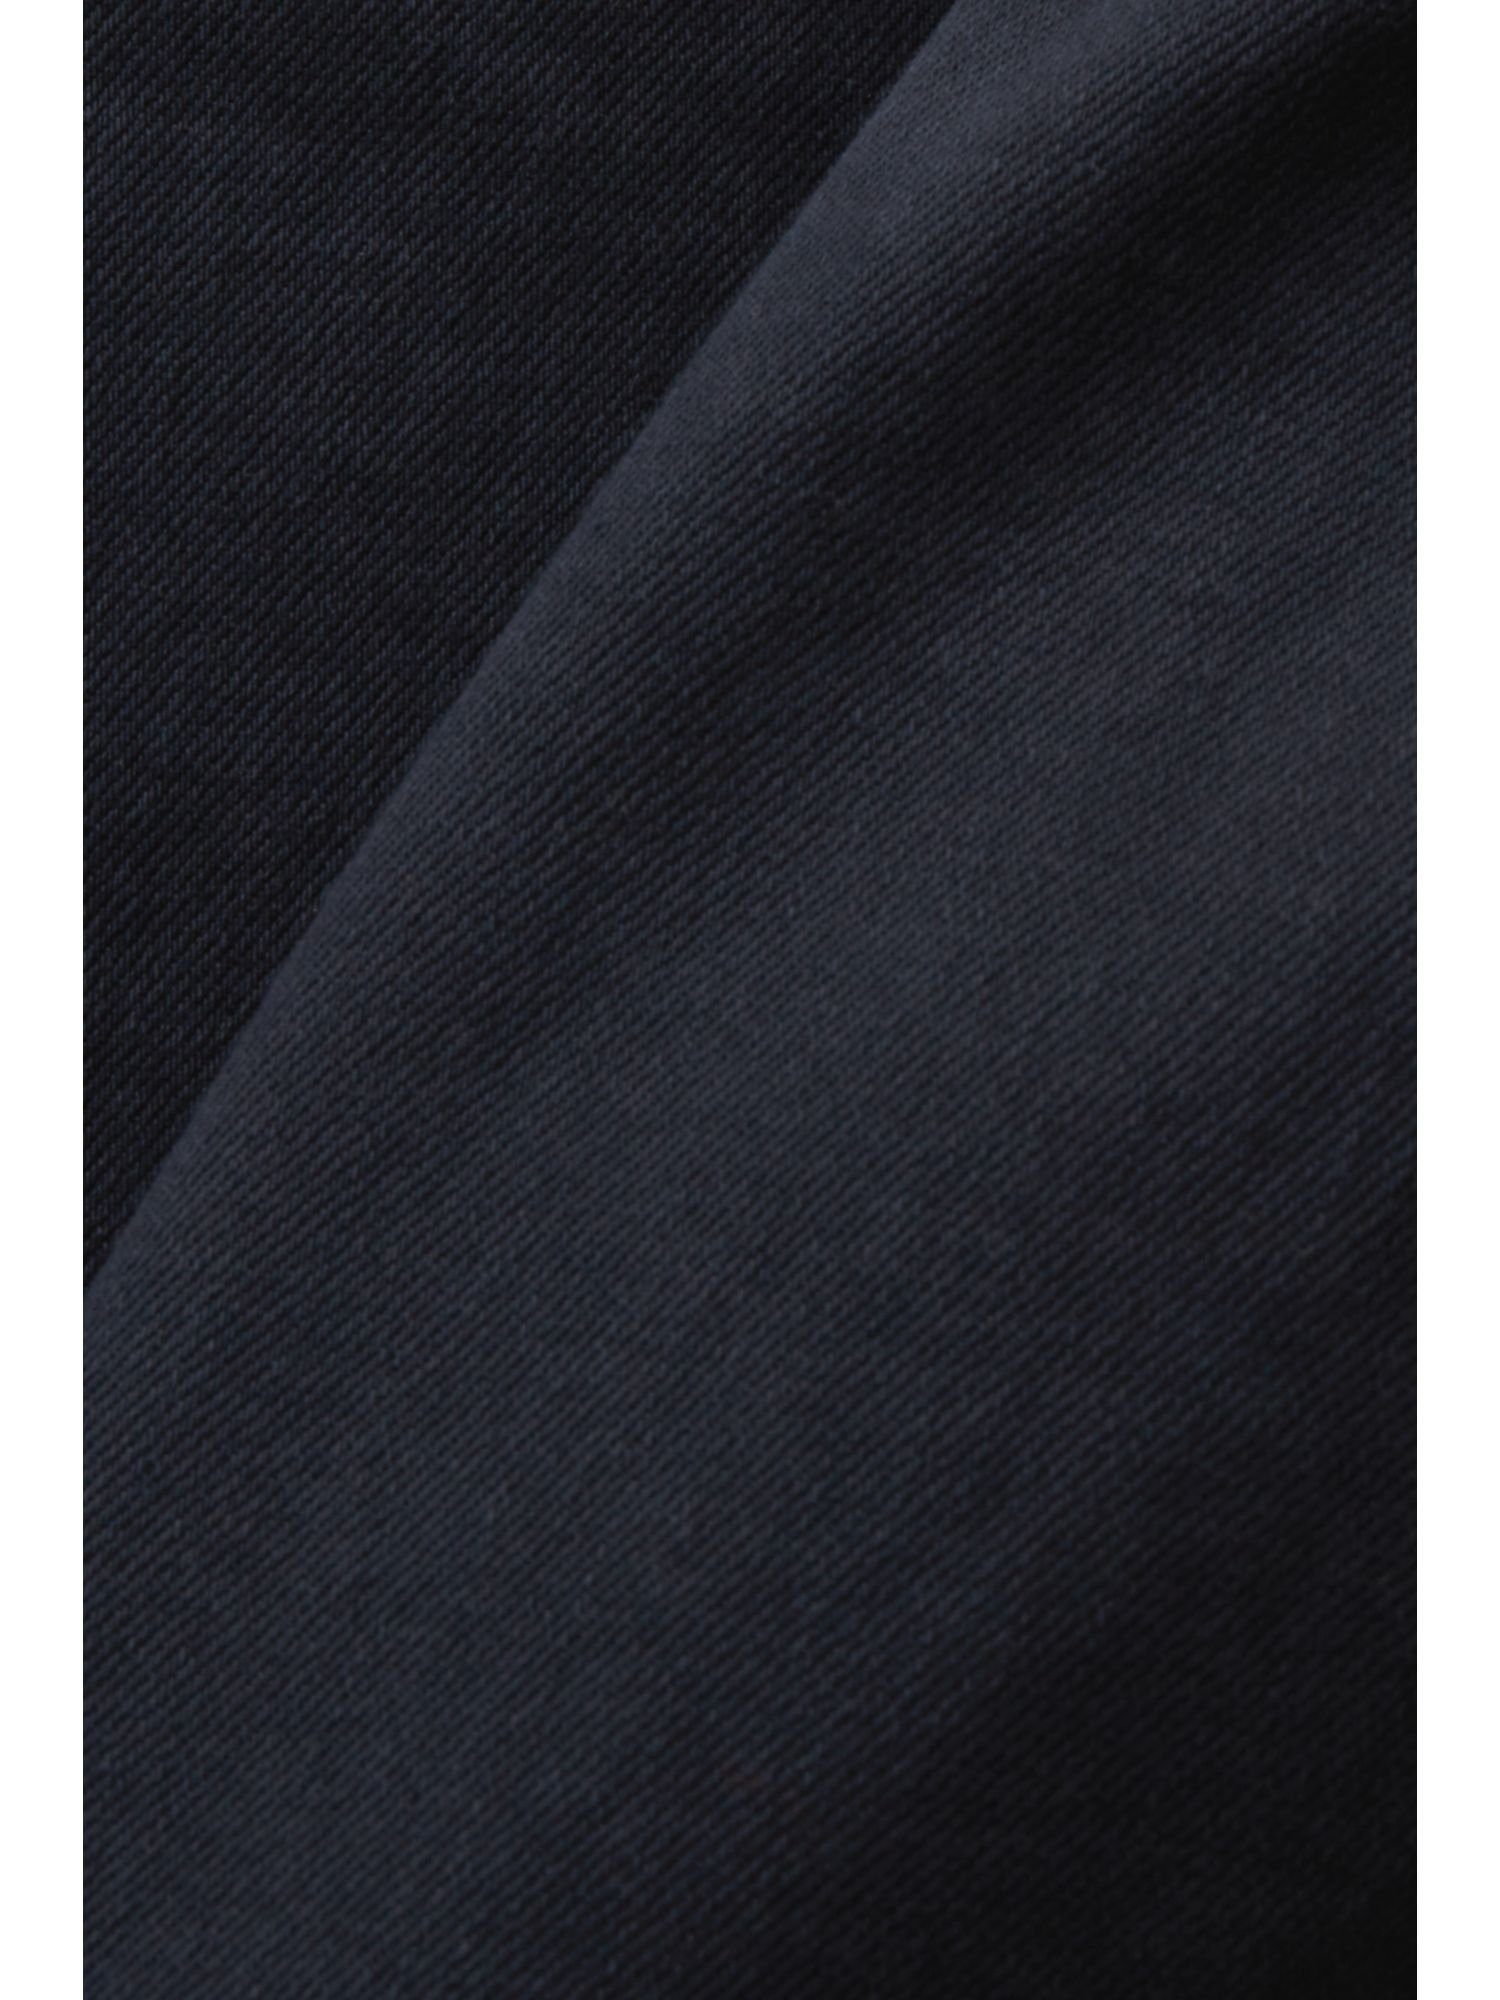 Esprit Stretch-Hose mit BLACK Stretchhose Passform schmaler